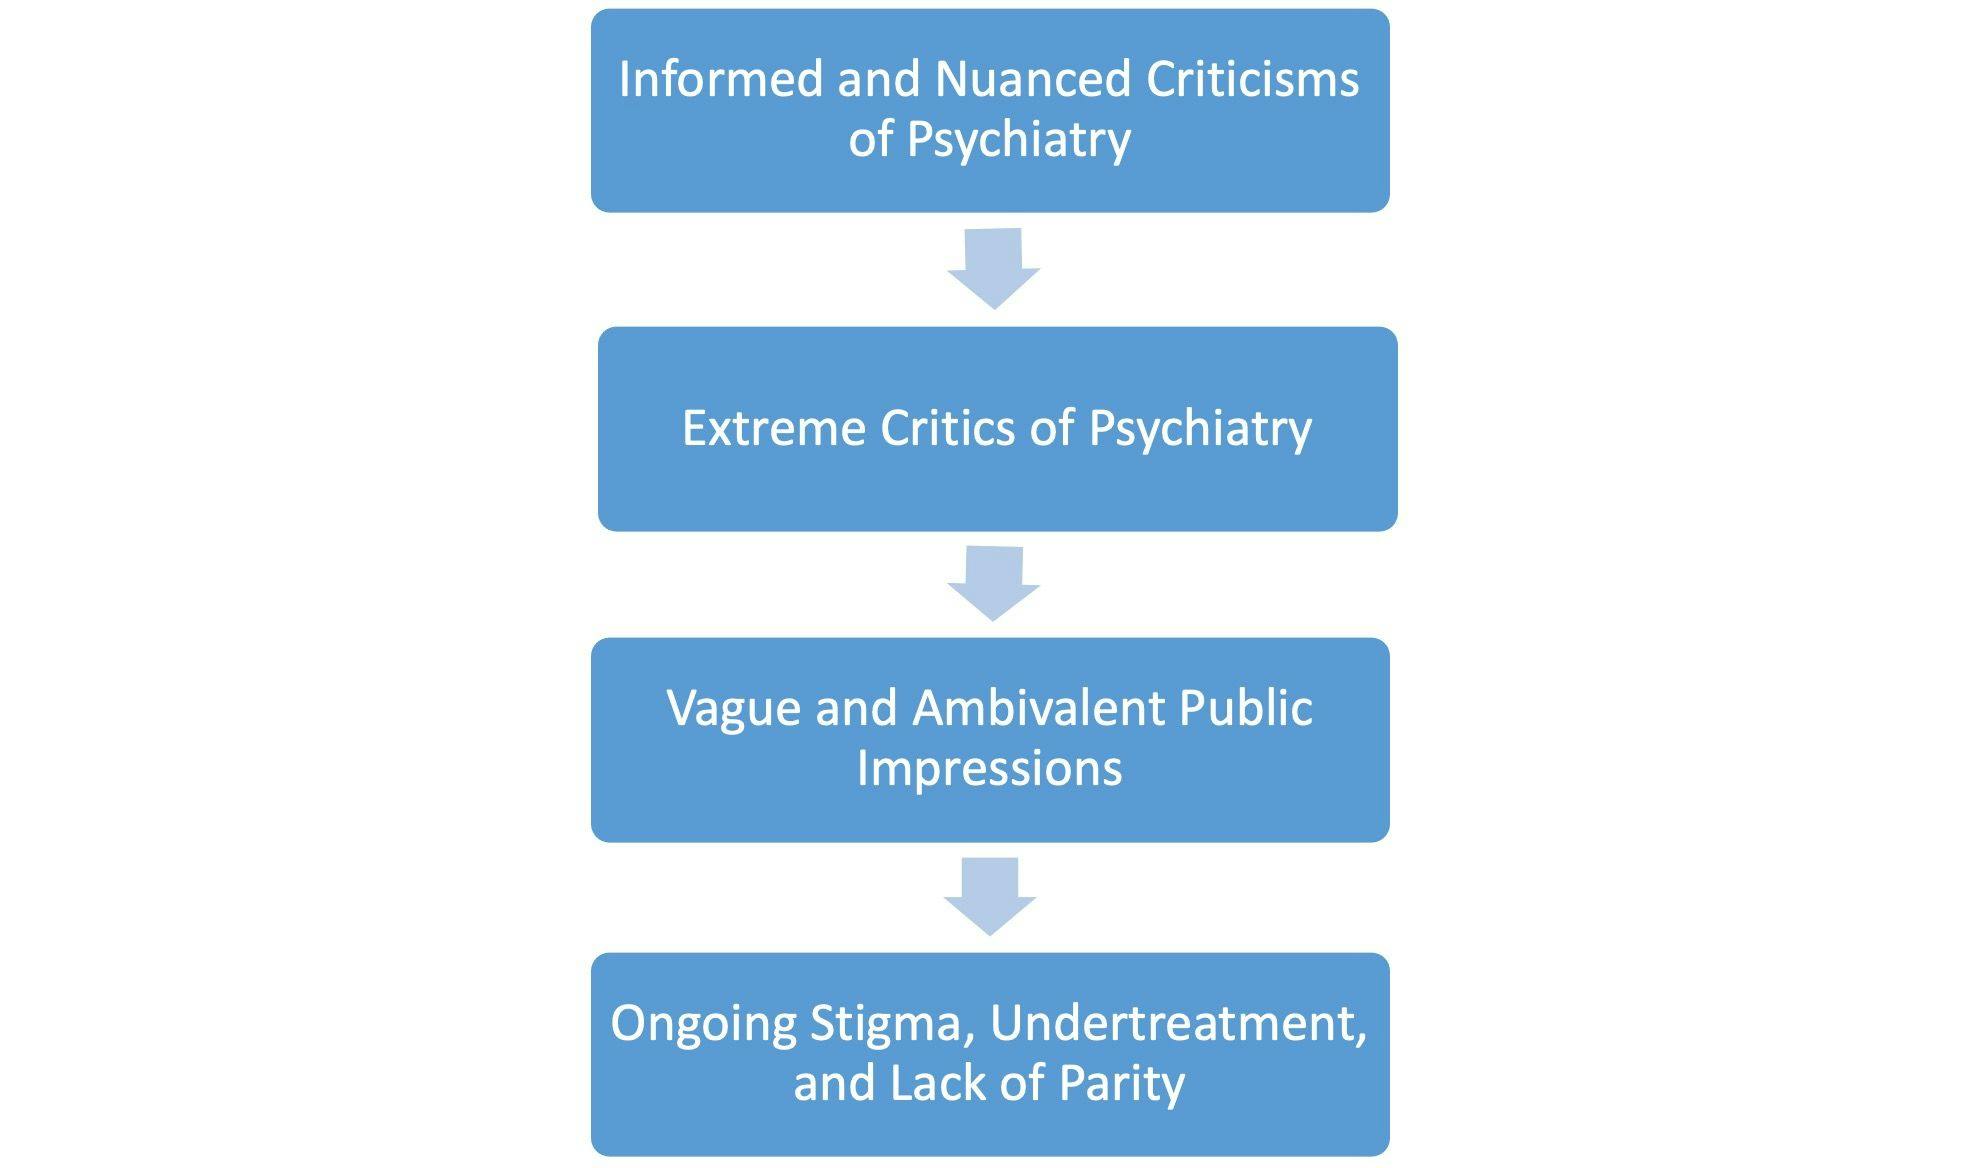 Table. Information Flow in Public Perception of Psychiatry